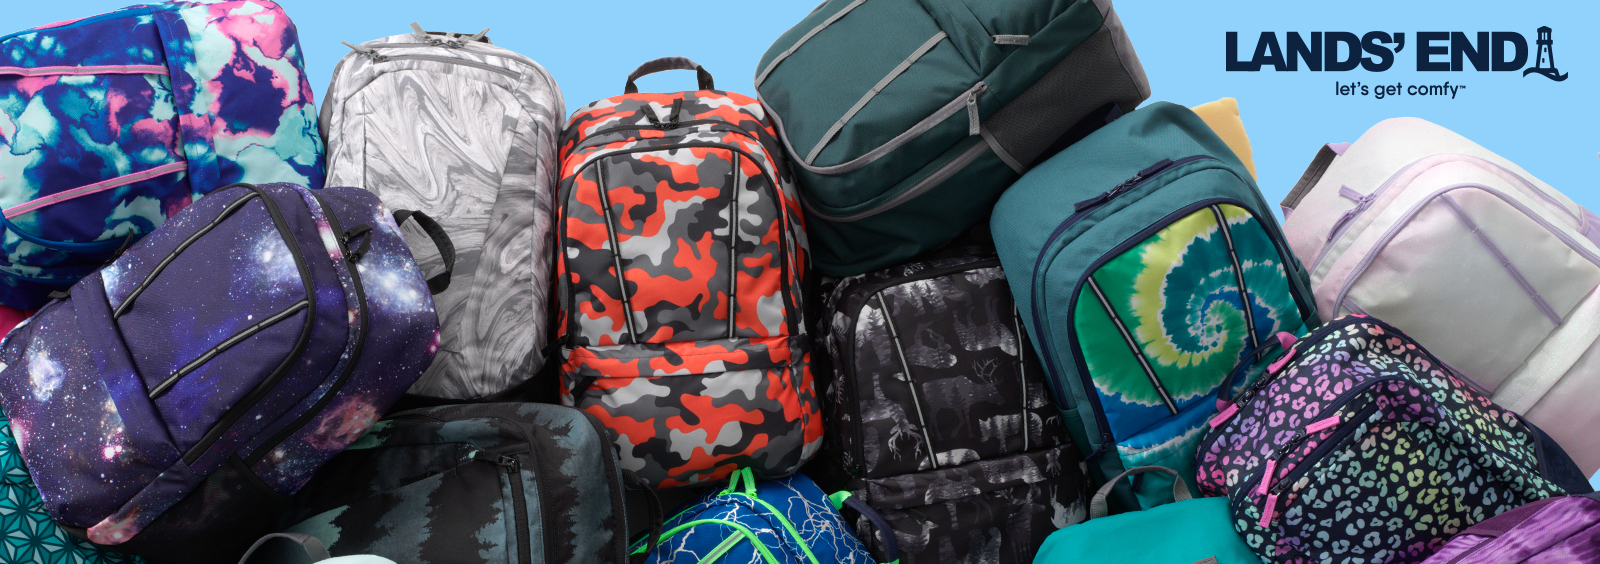 Why Backpacks Make the Best Sleepover Bags